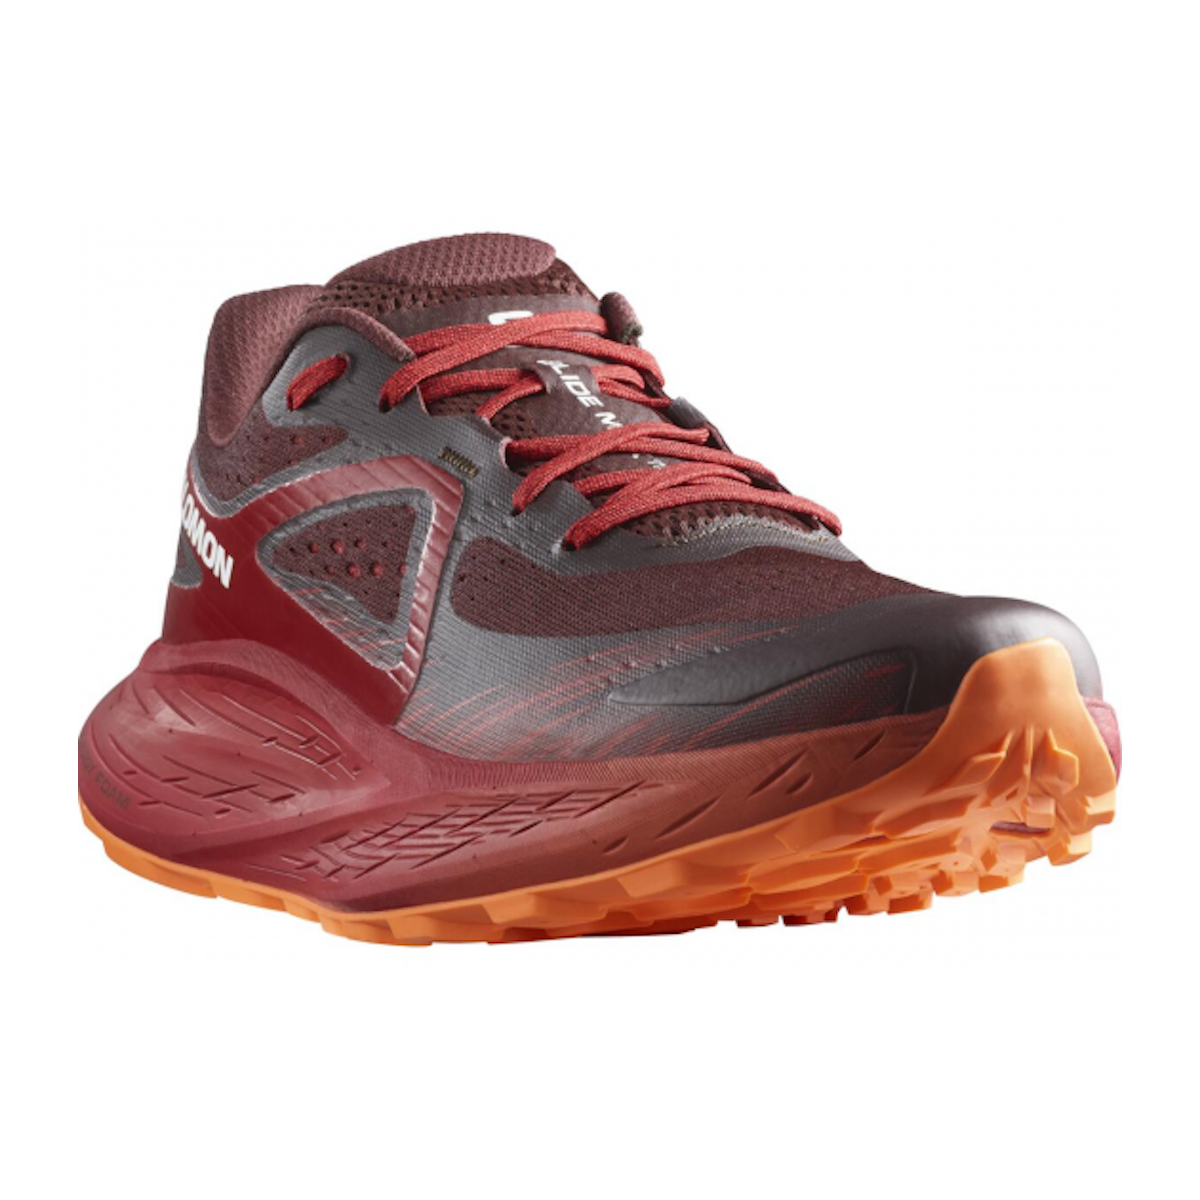 SALOMON GLIDE MAX TR trail running shoes - brown/red/orange